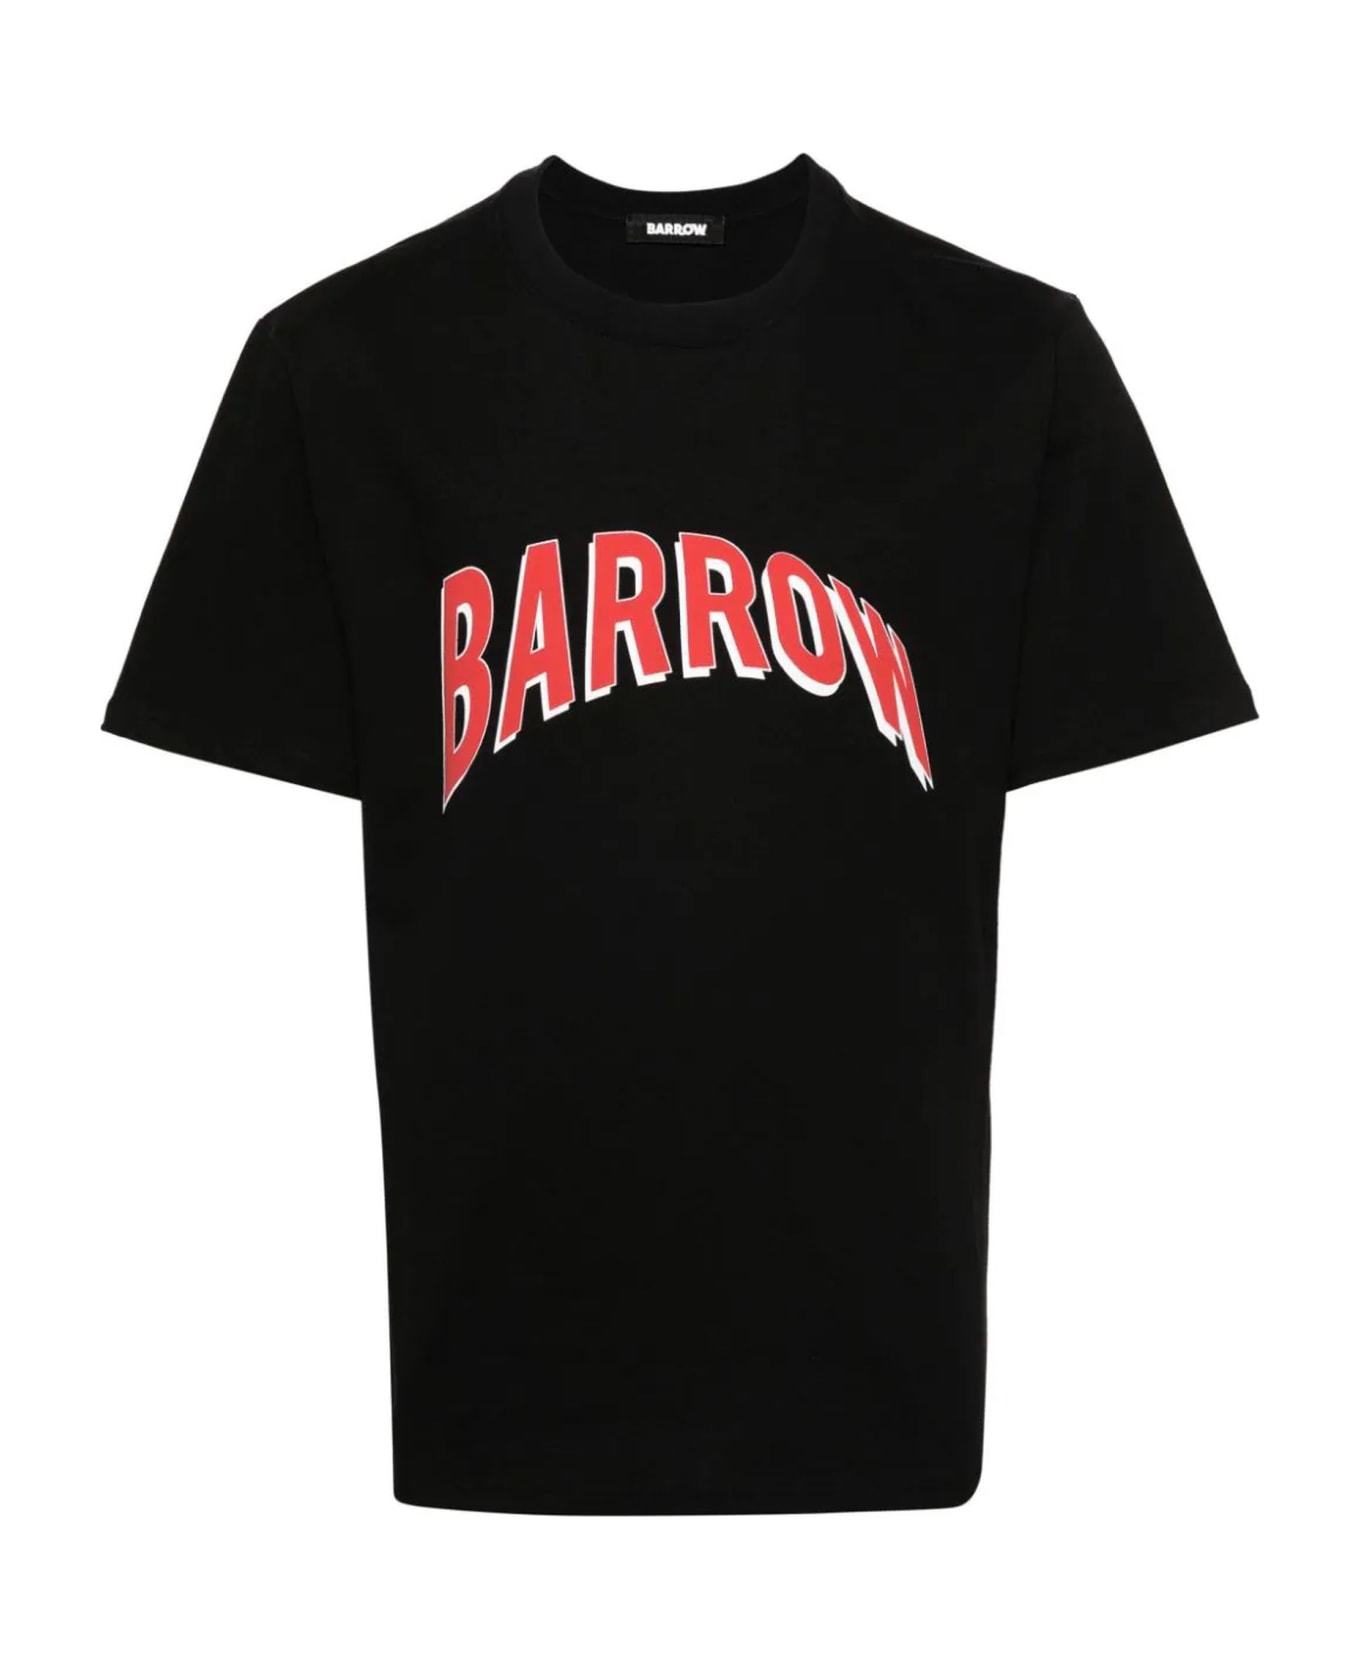 Barrow Black Cotton T-shirt - Nero